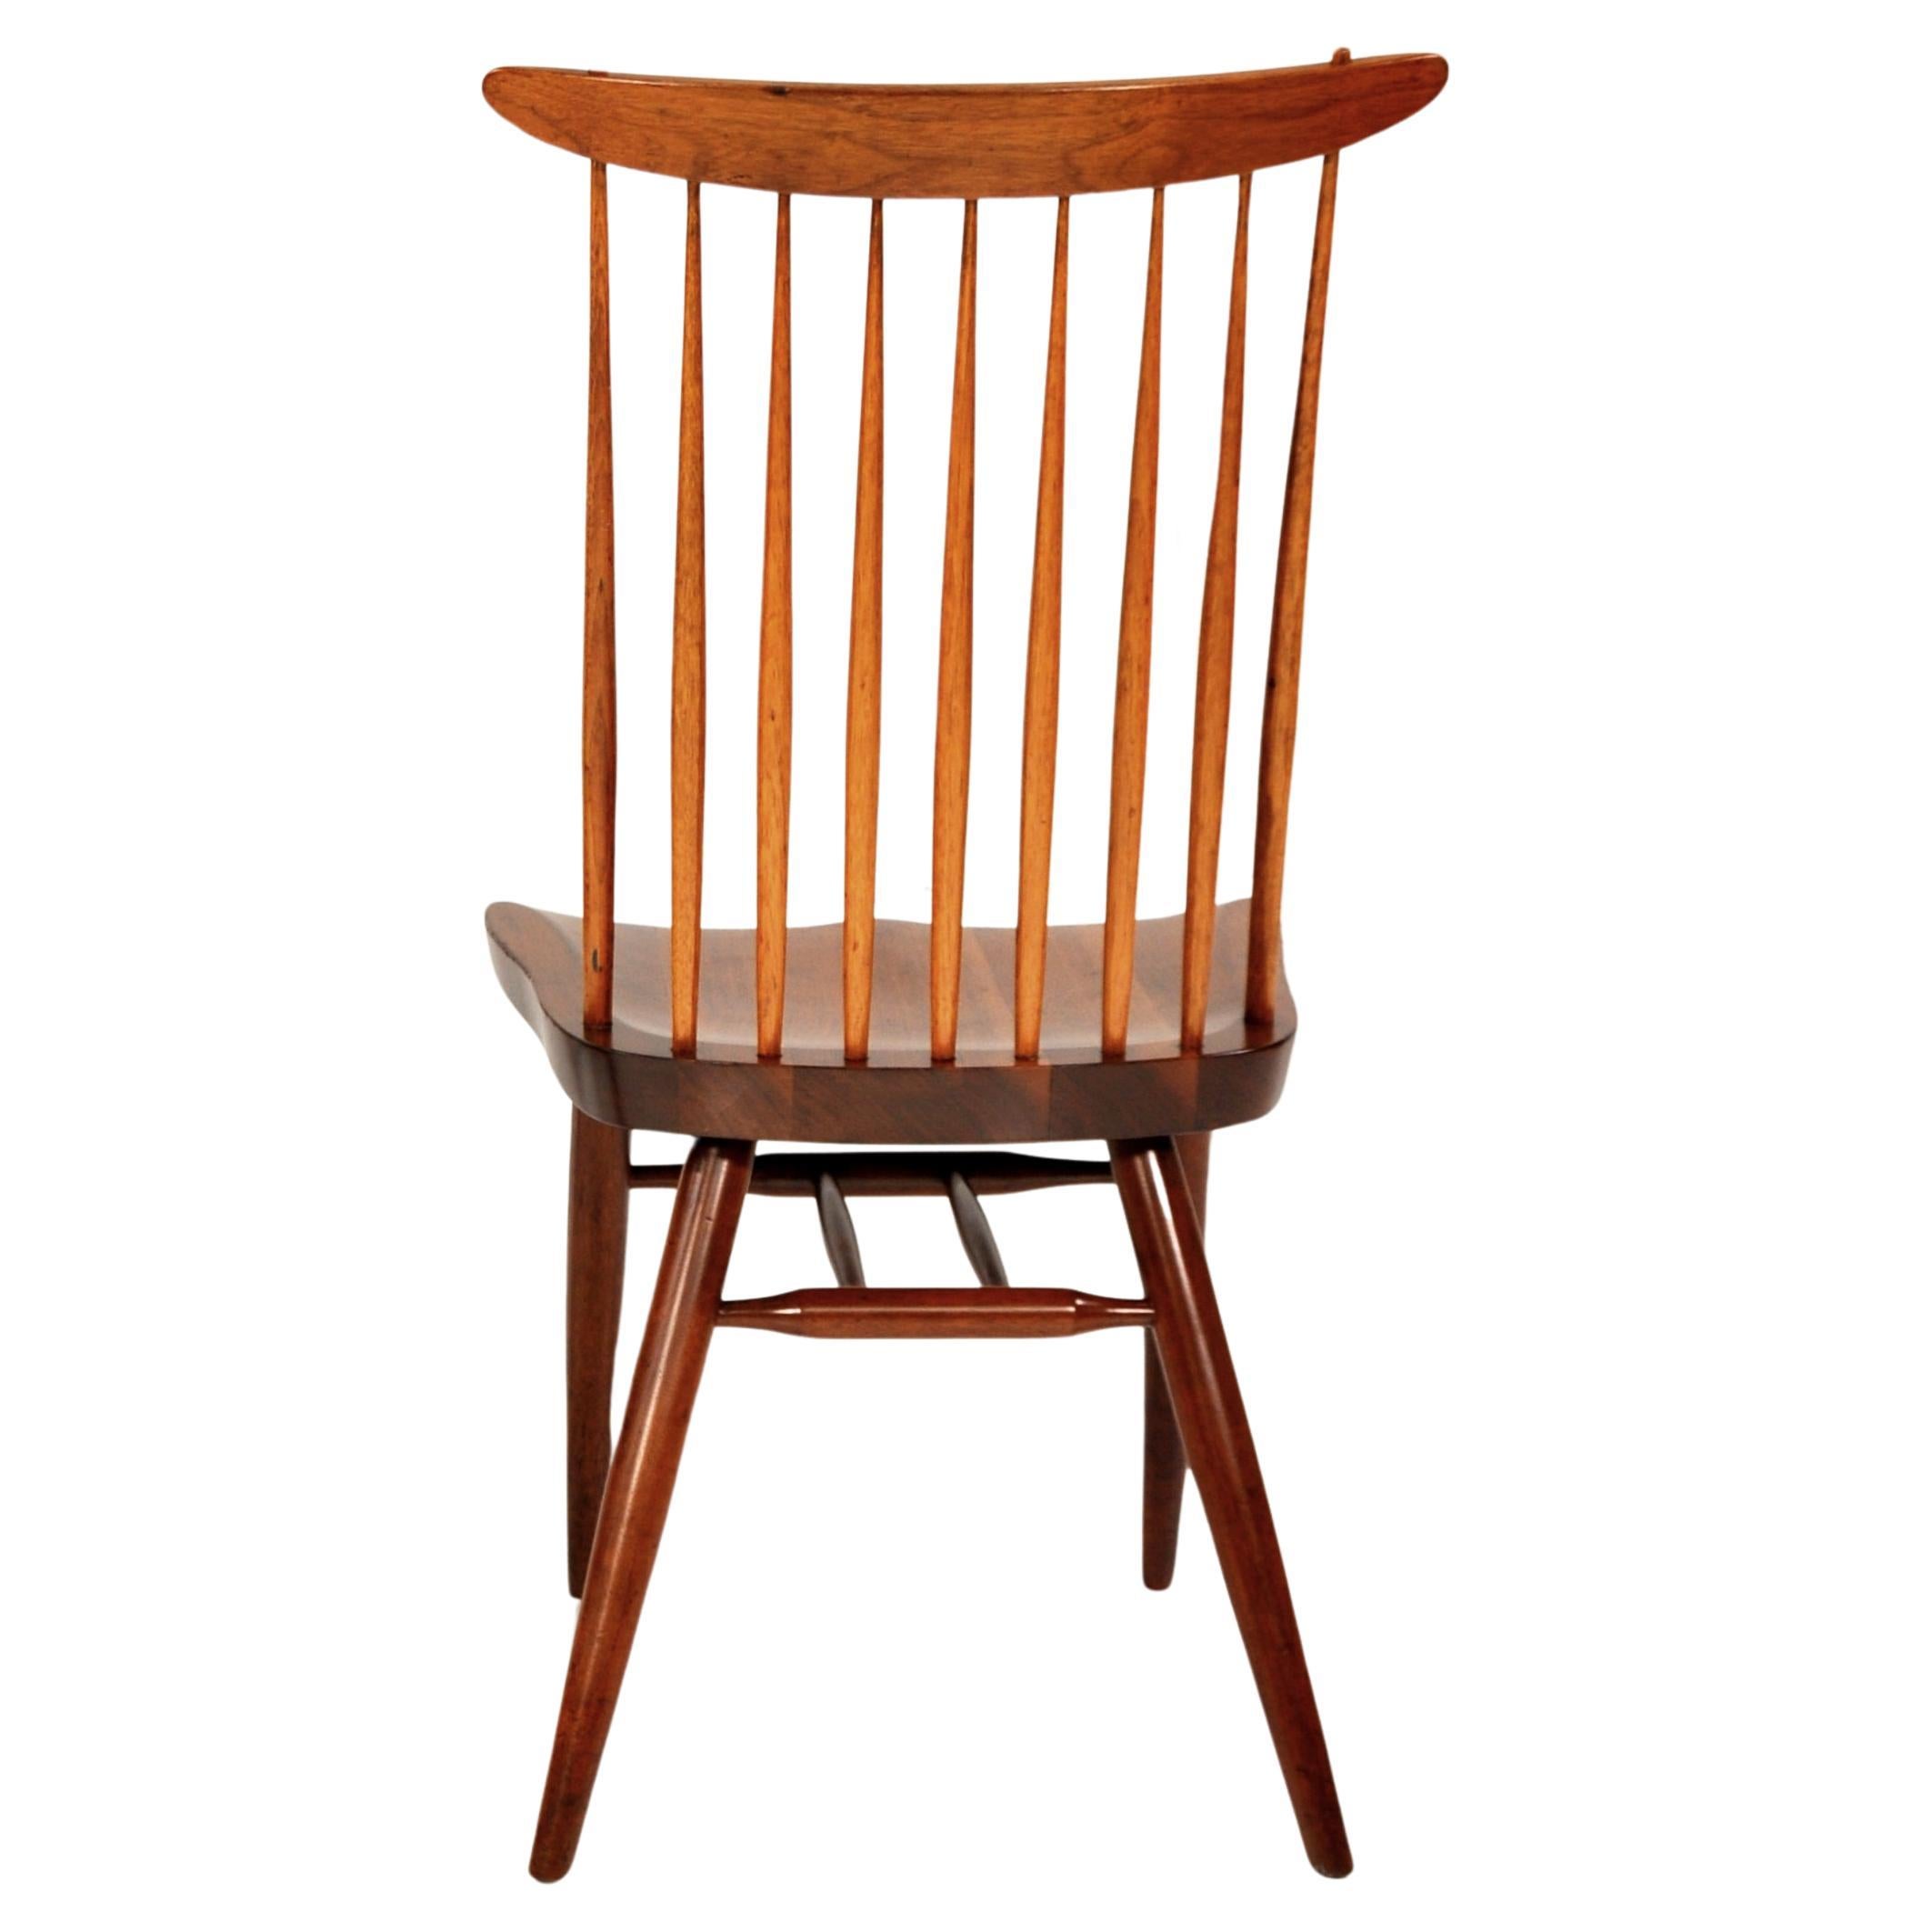 Neuer Stuhl von George Nakashima (Hickory)